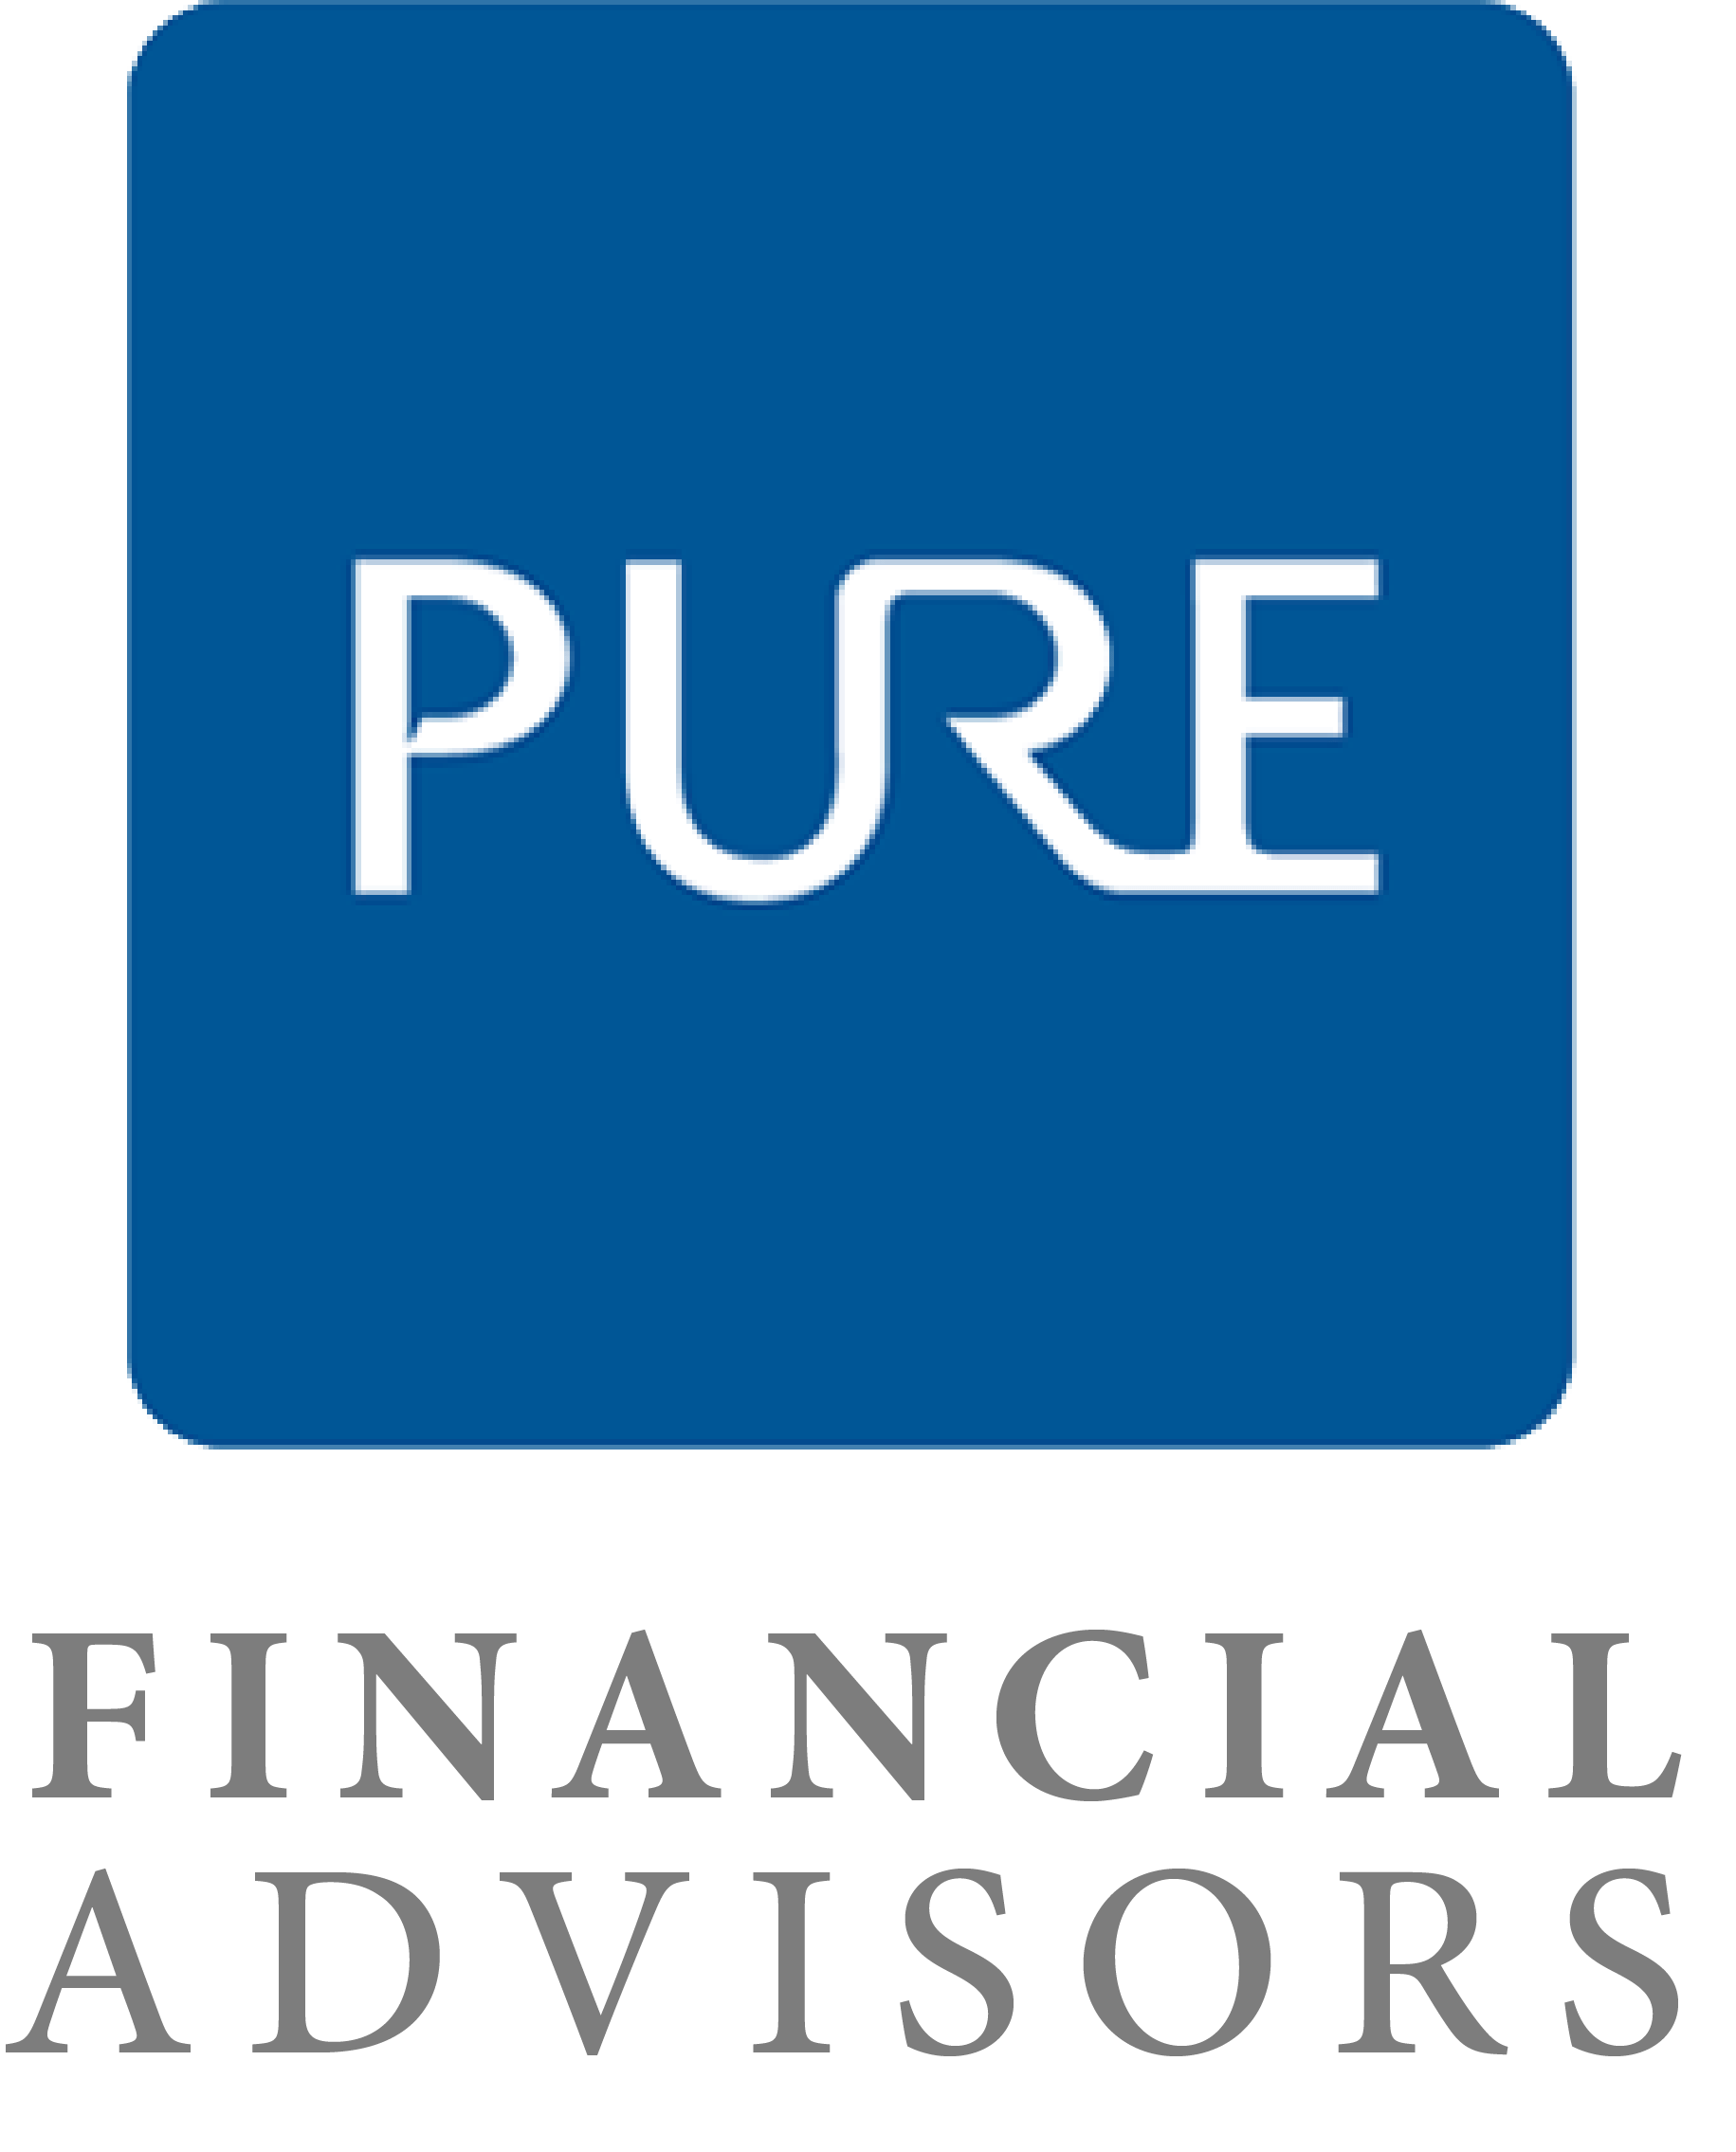 Ask Financials Logo - Fiduciary Financial Advisors